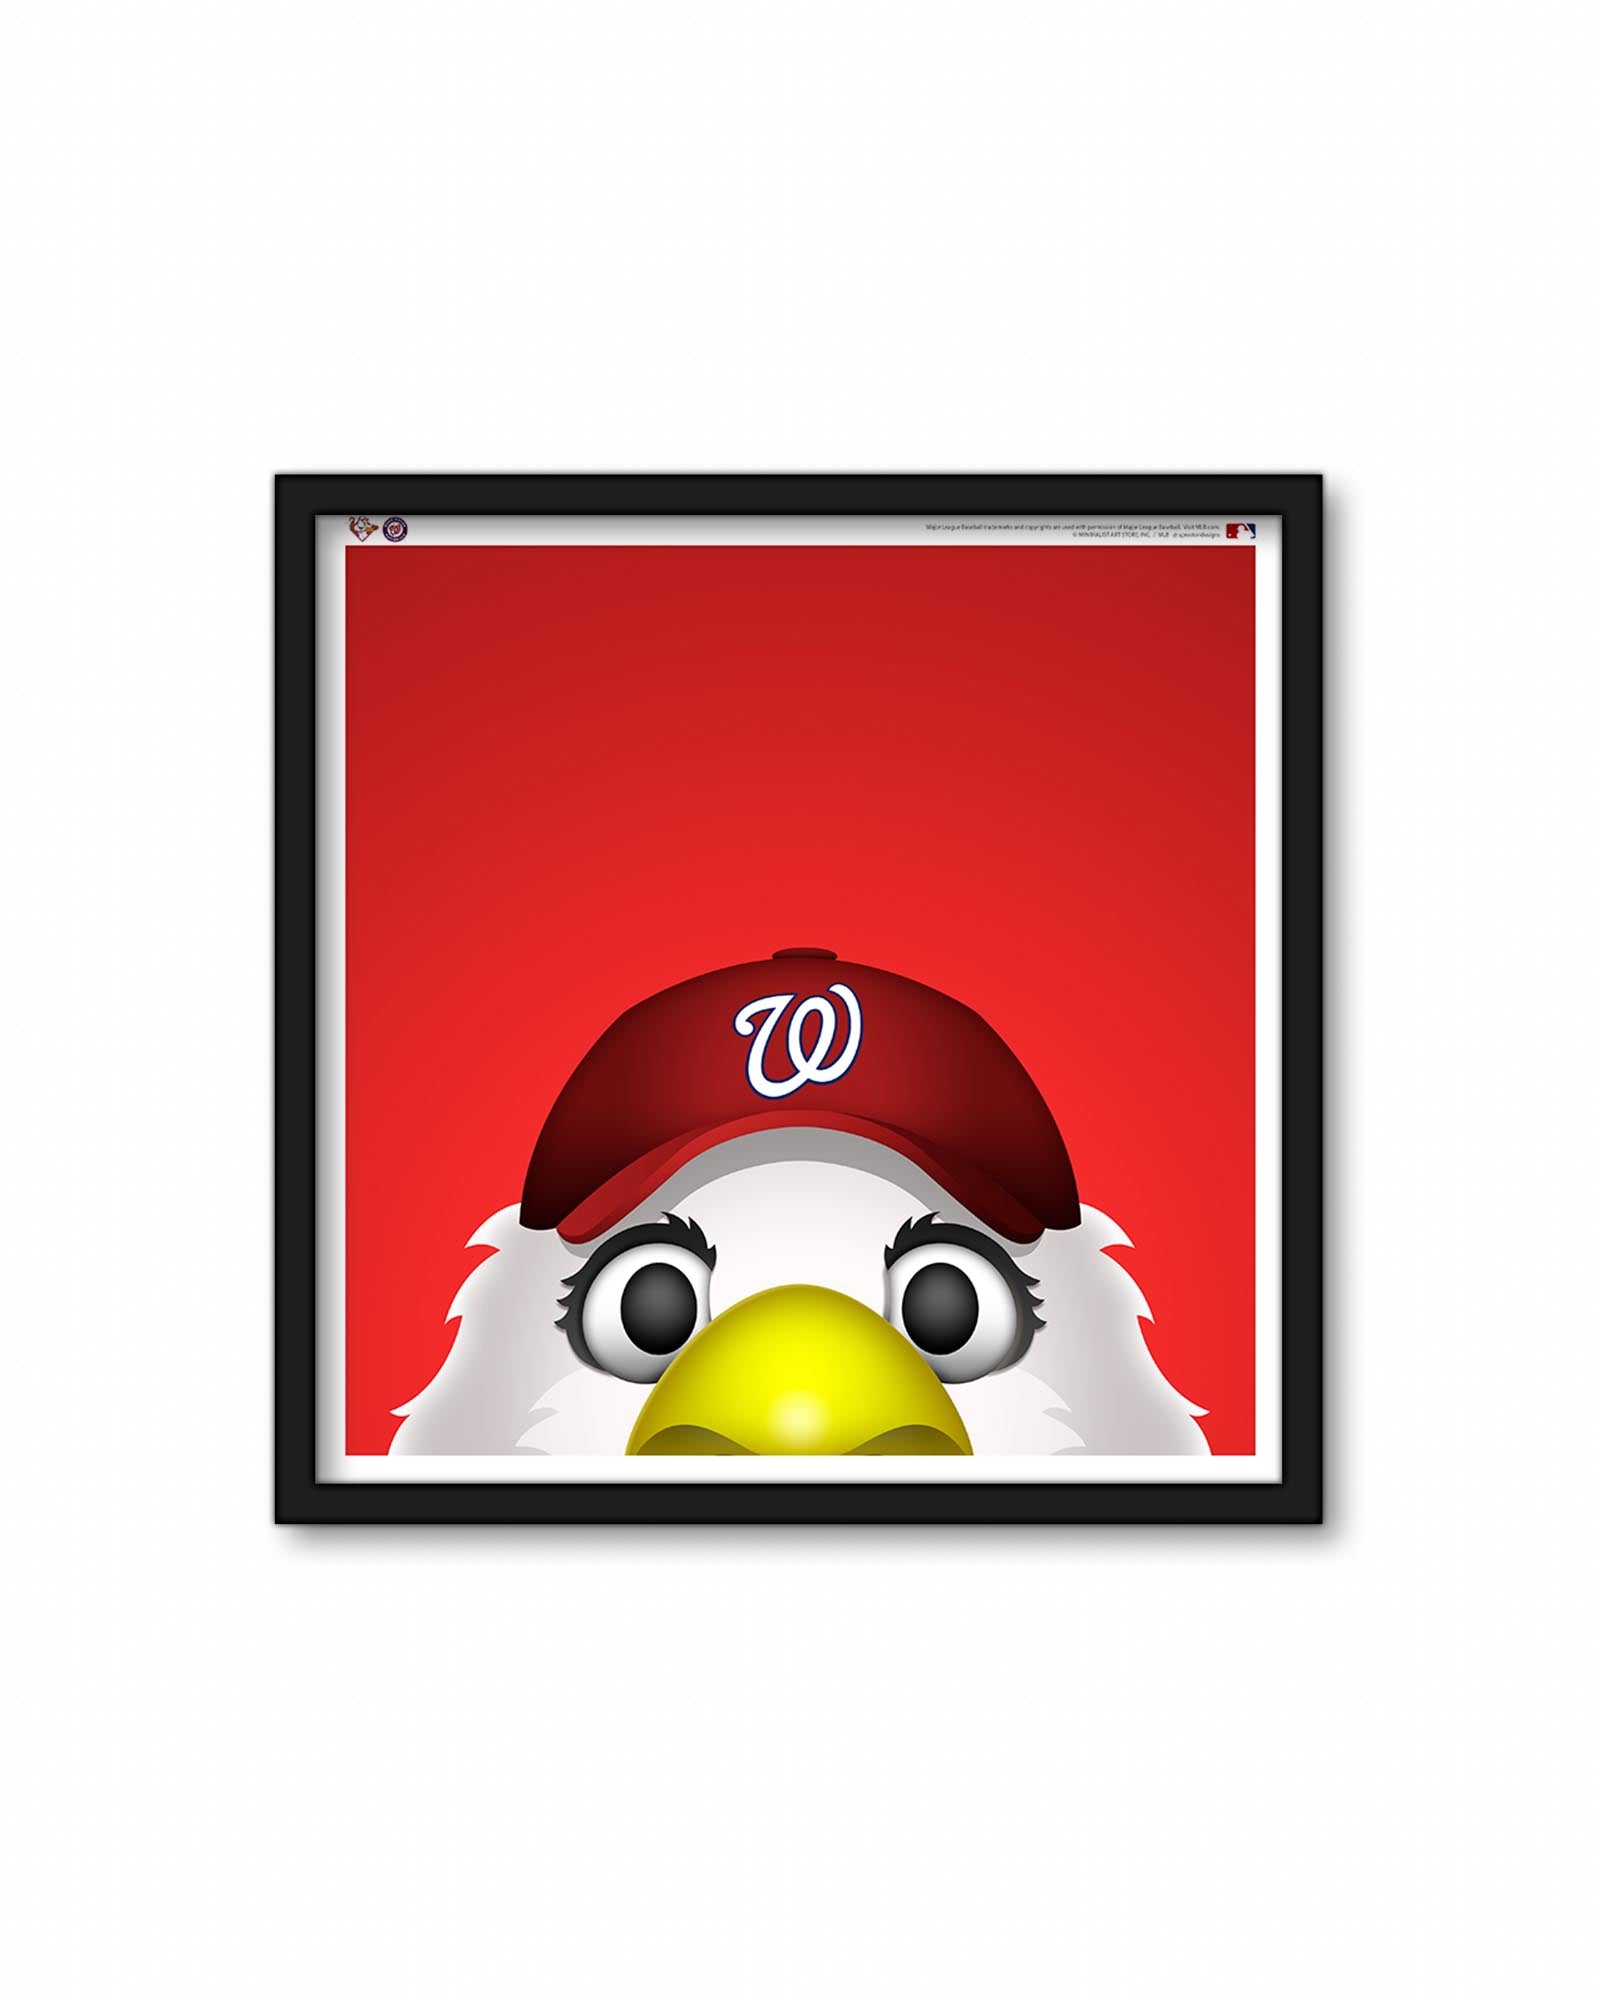 Washington Nationals mascot Screech